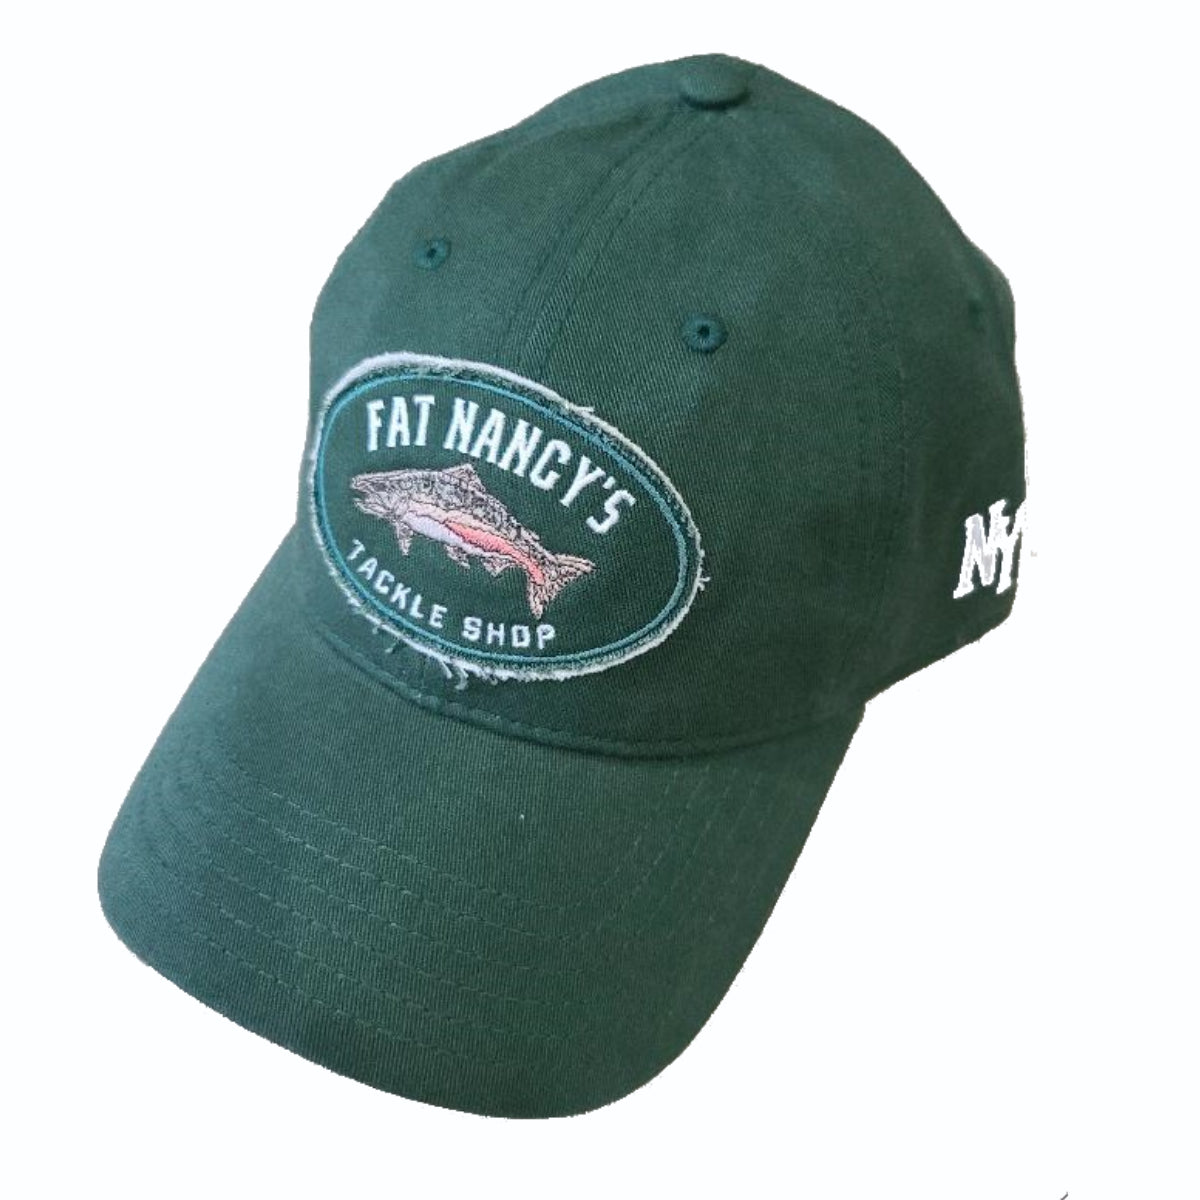 Fat Nancy's Tackle Shop Hat Dark Spruce